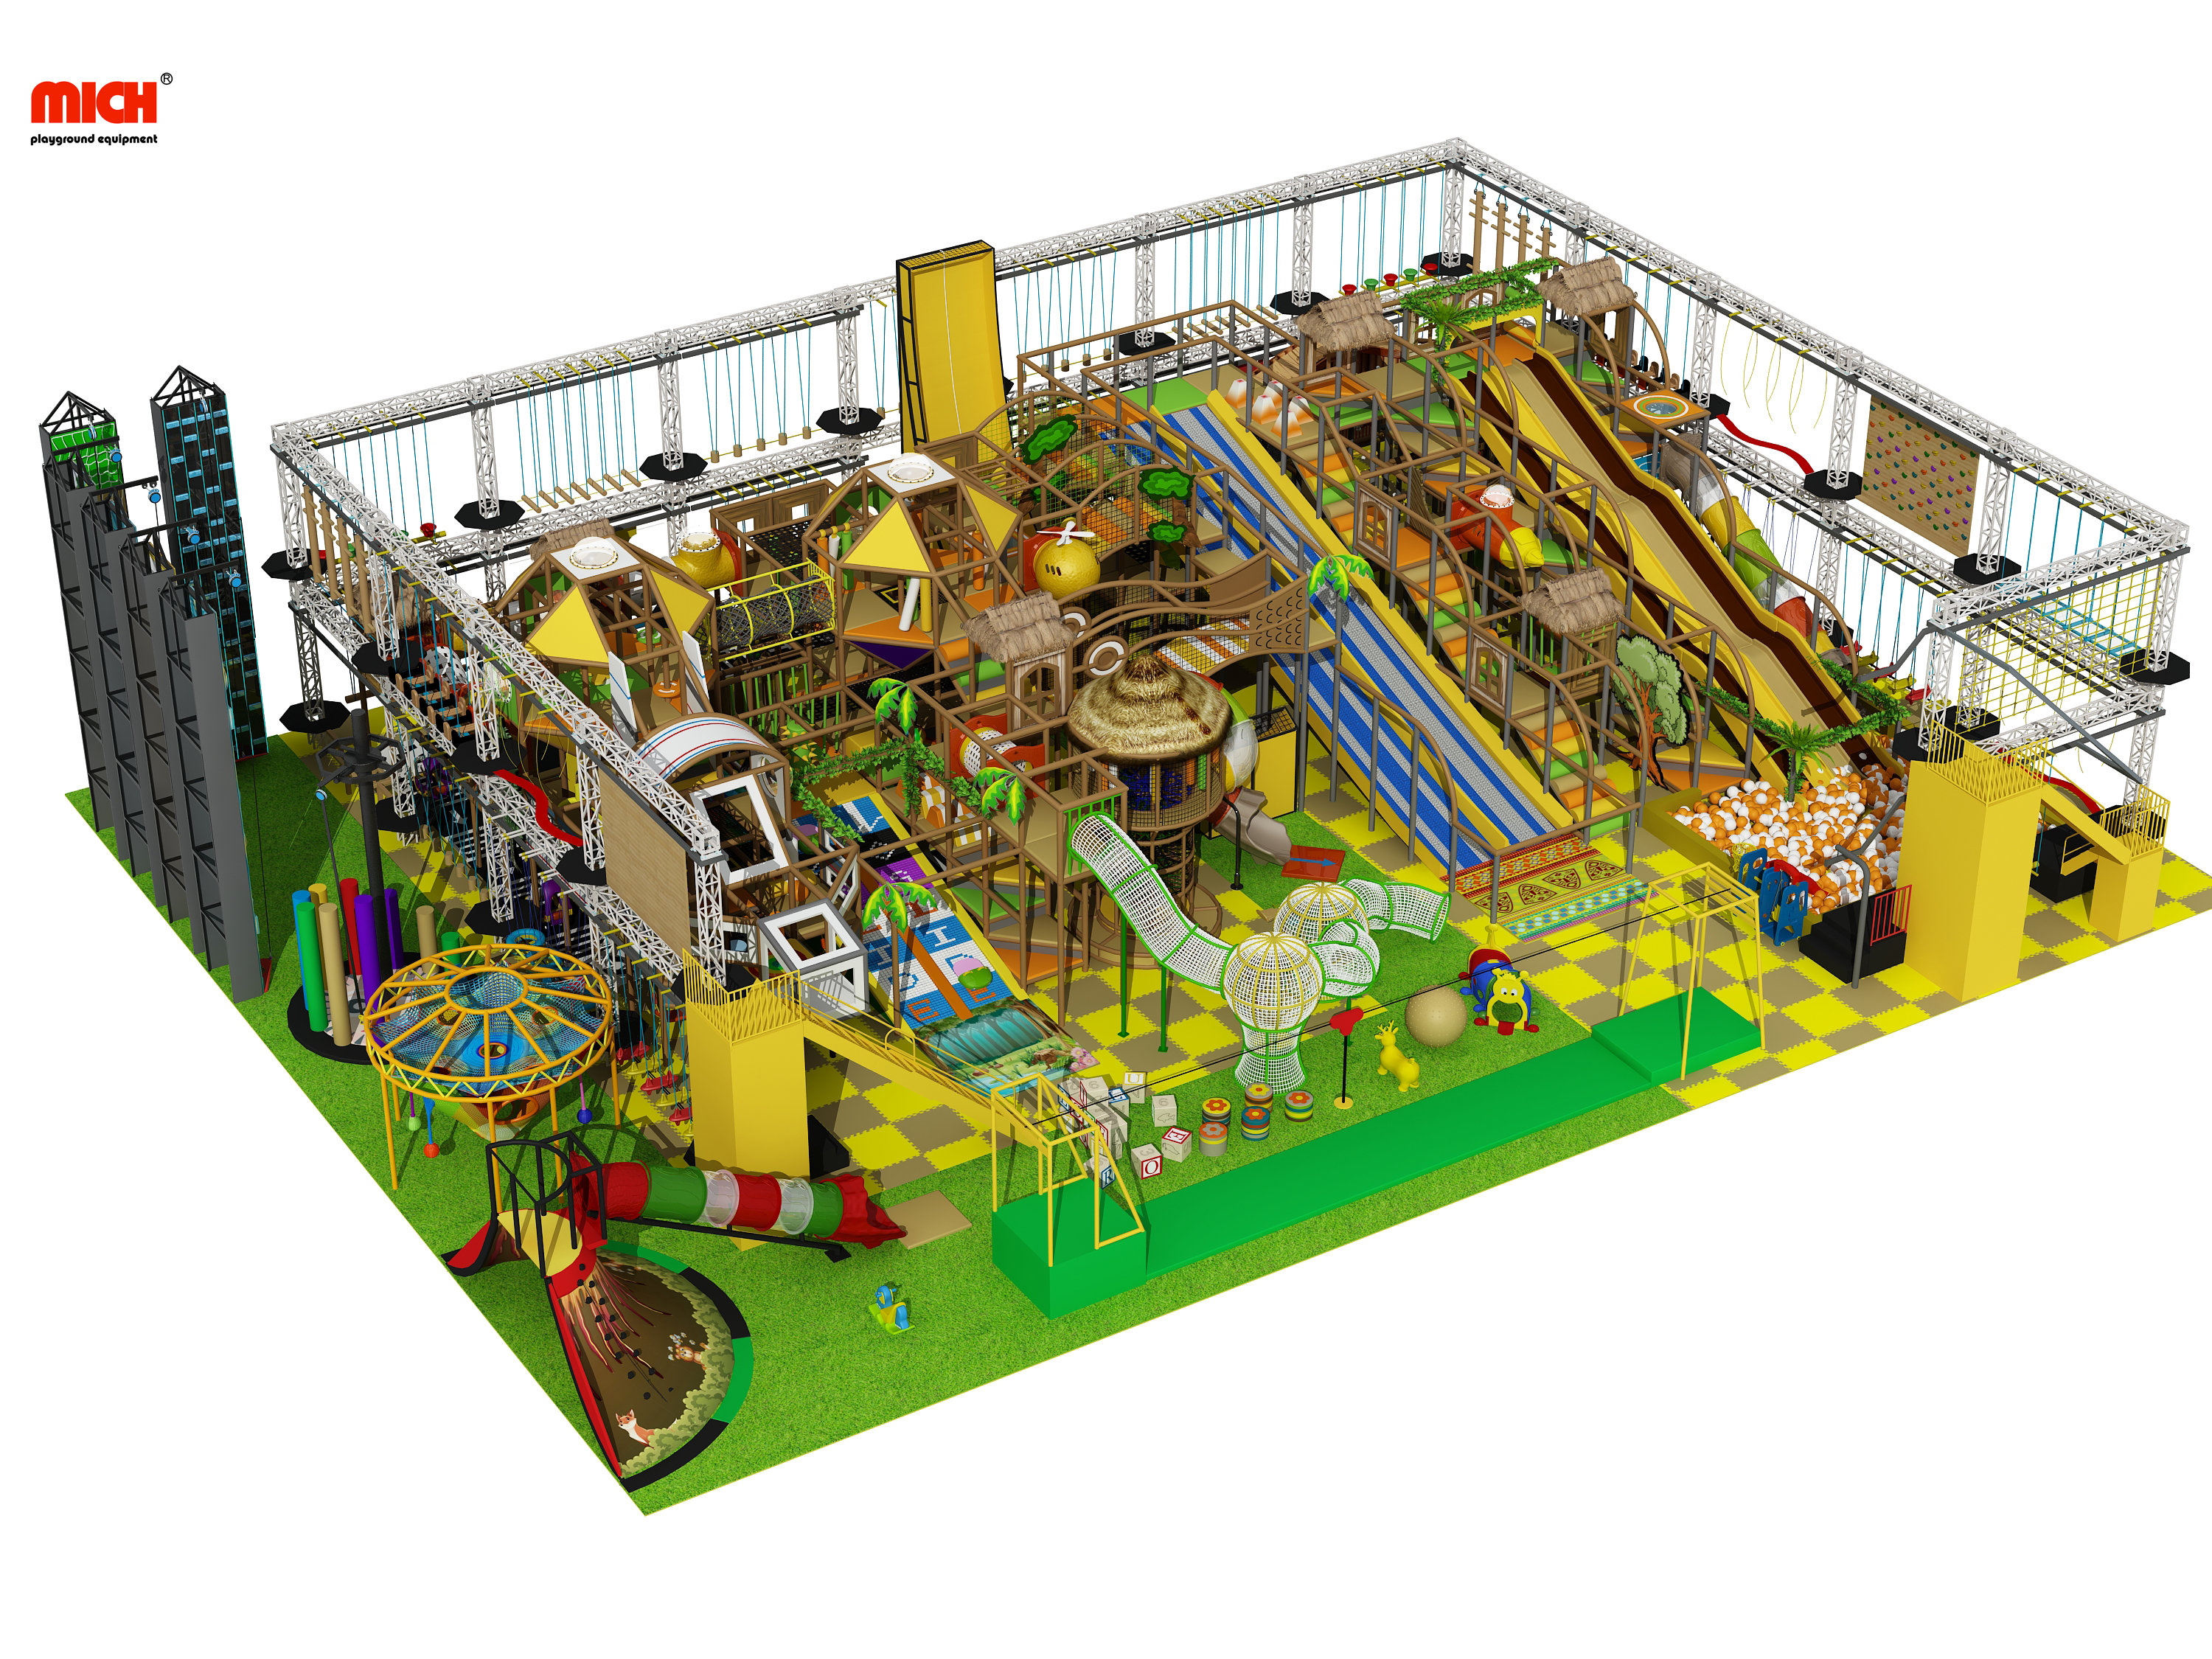 690sqm Playground de interior para niños adultos